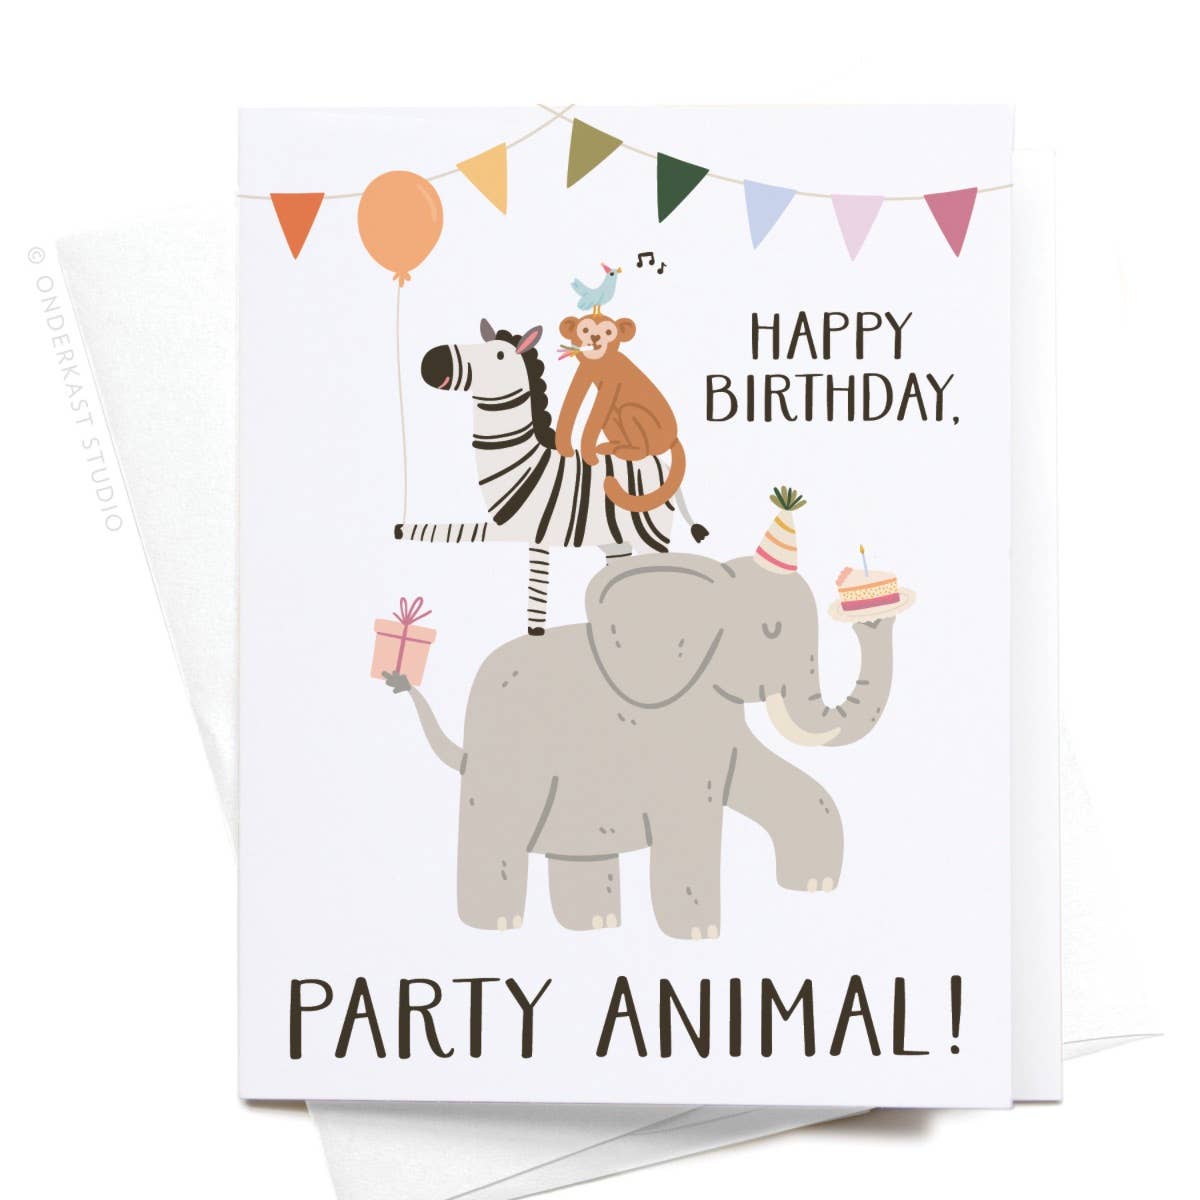 Happy Birthday Party Animal Card